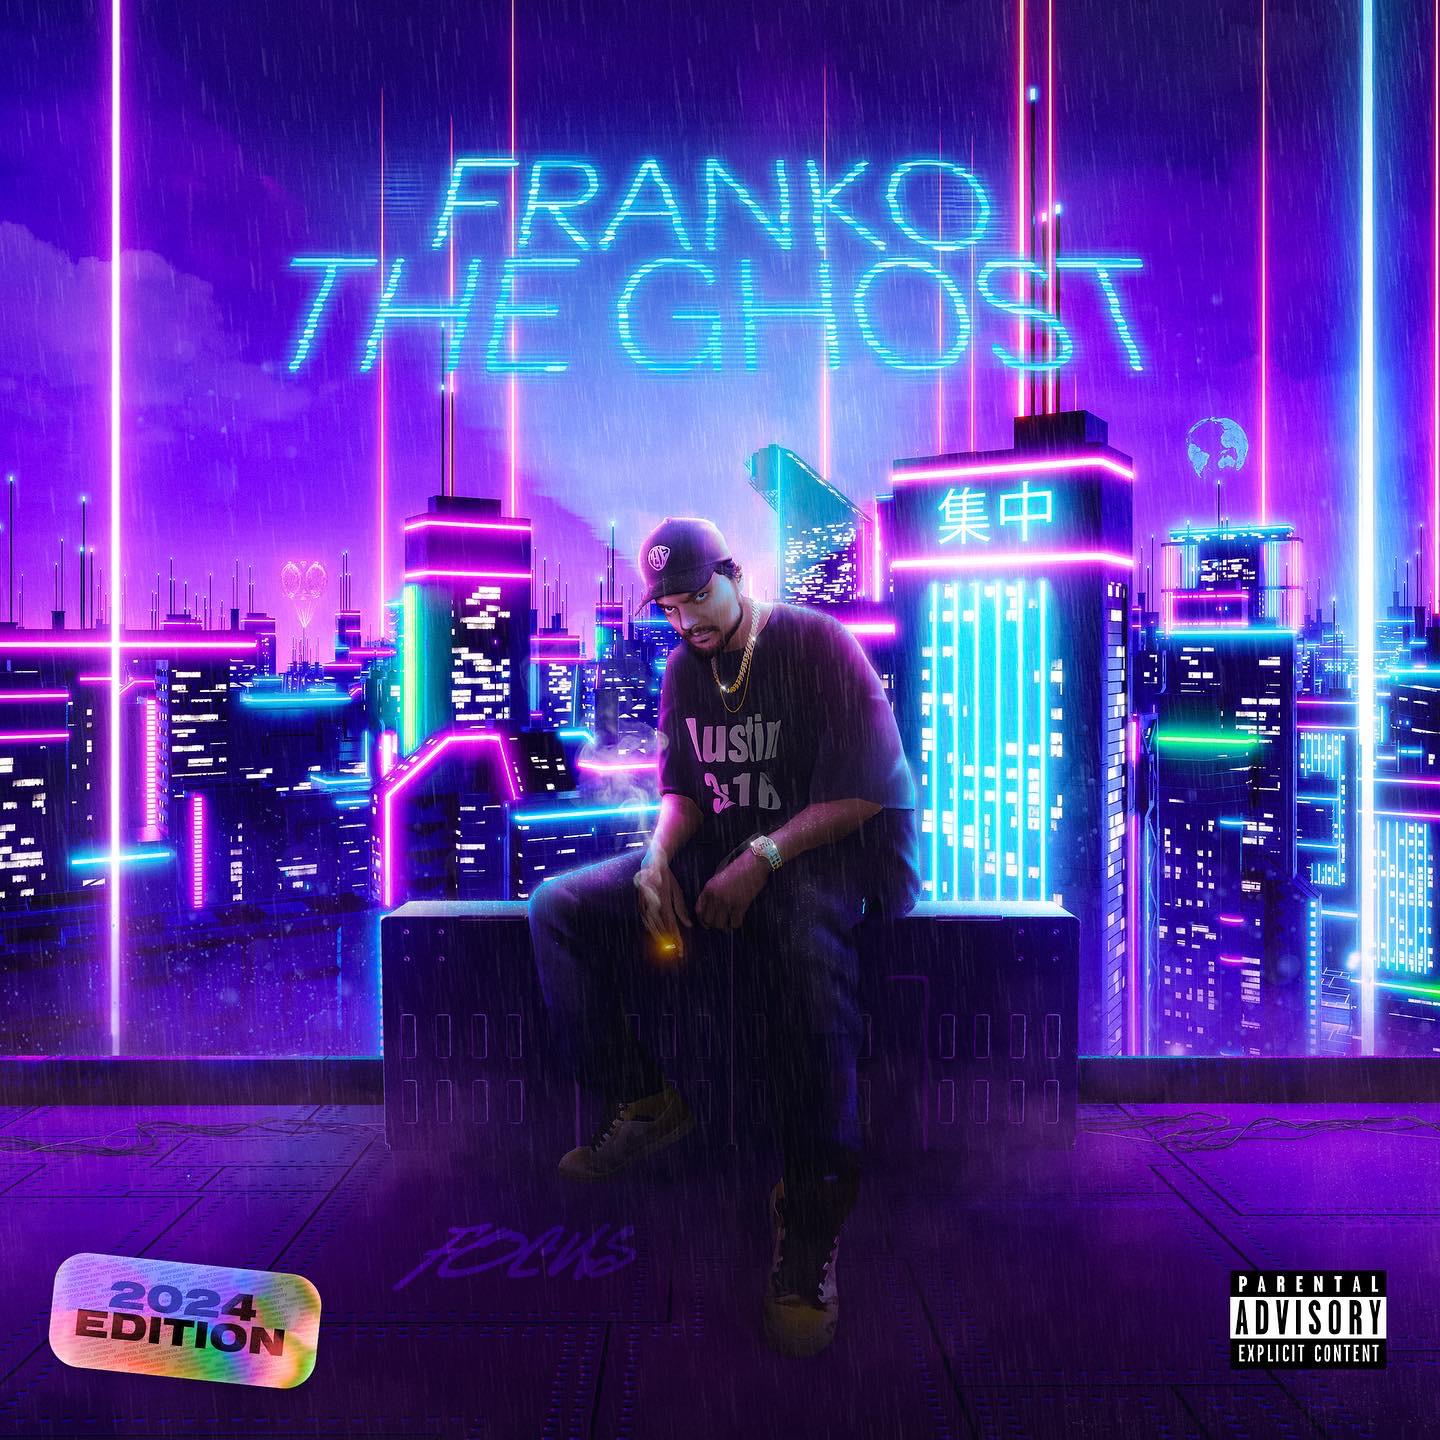 Franko-the-ghost-singer-dj-music-producer-australia-music-album-focus